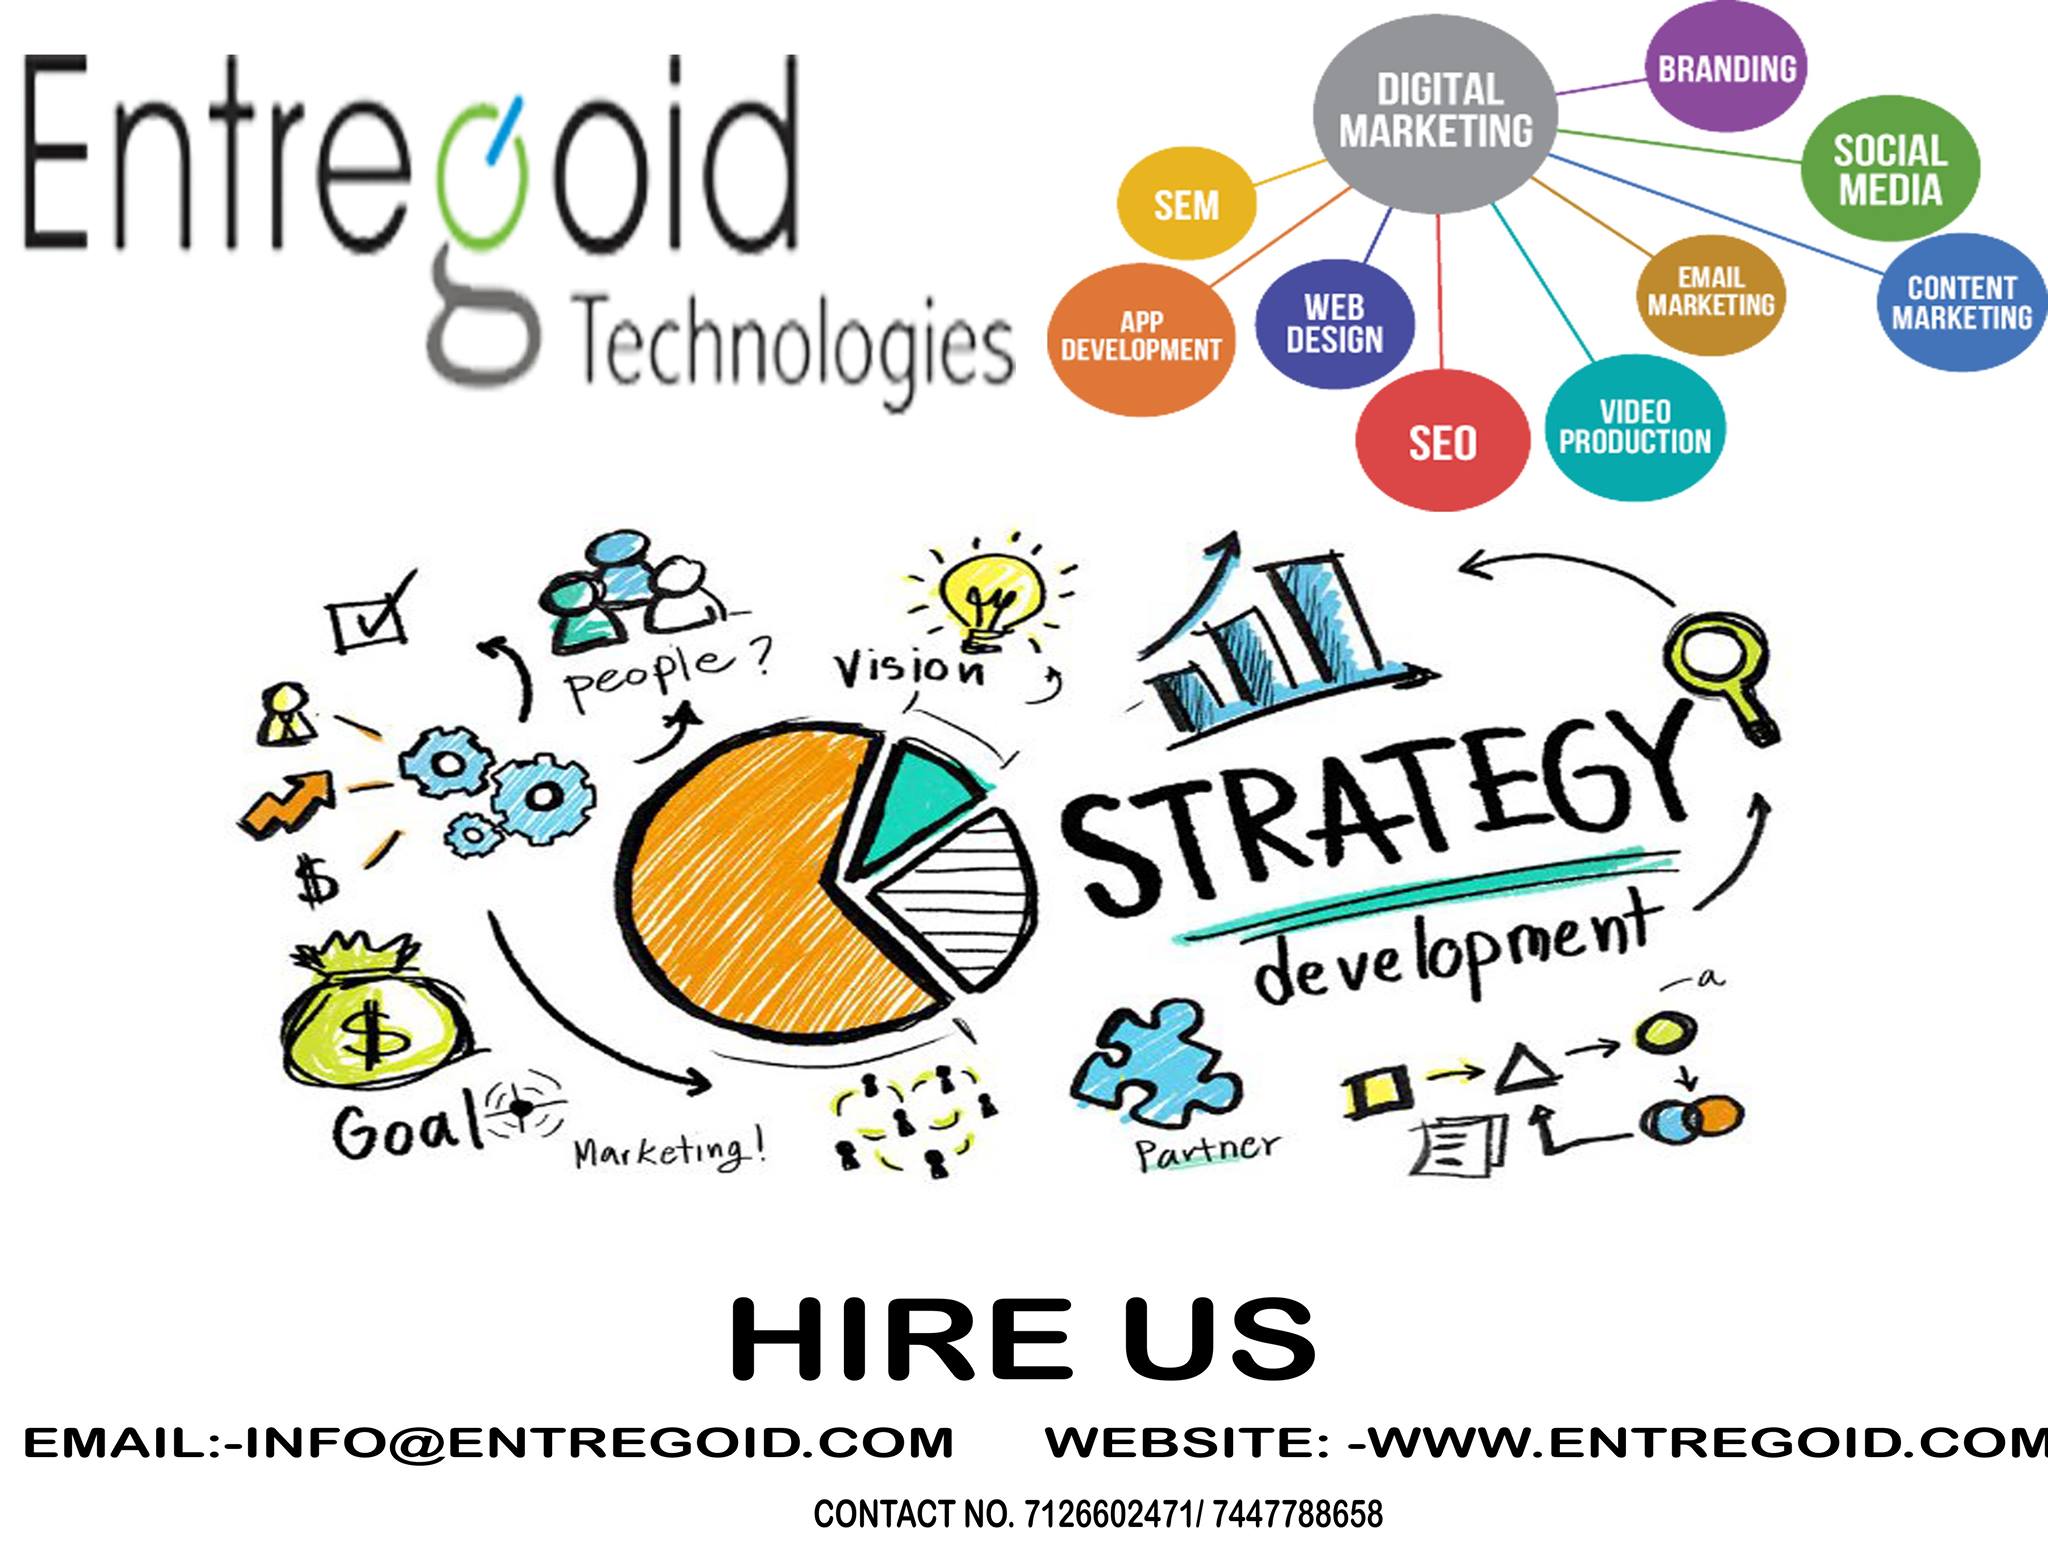 Digital Marketing Company | Entregoid Technologies